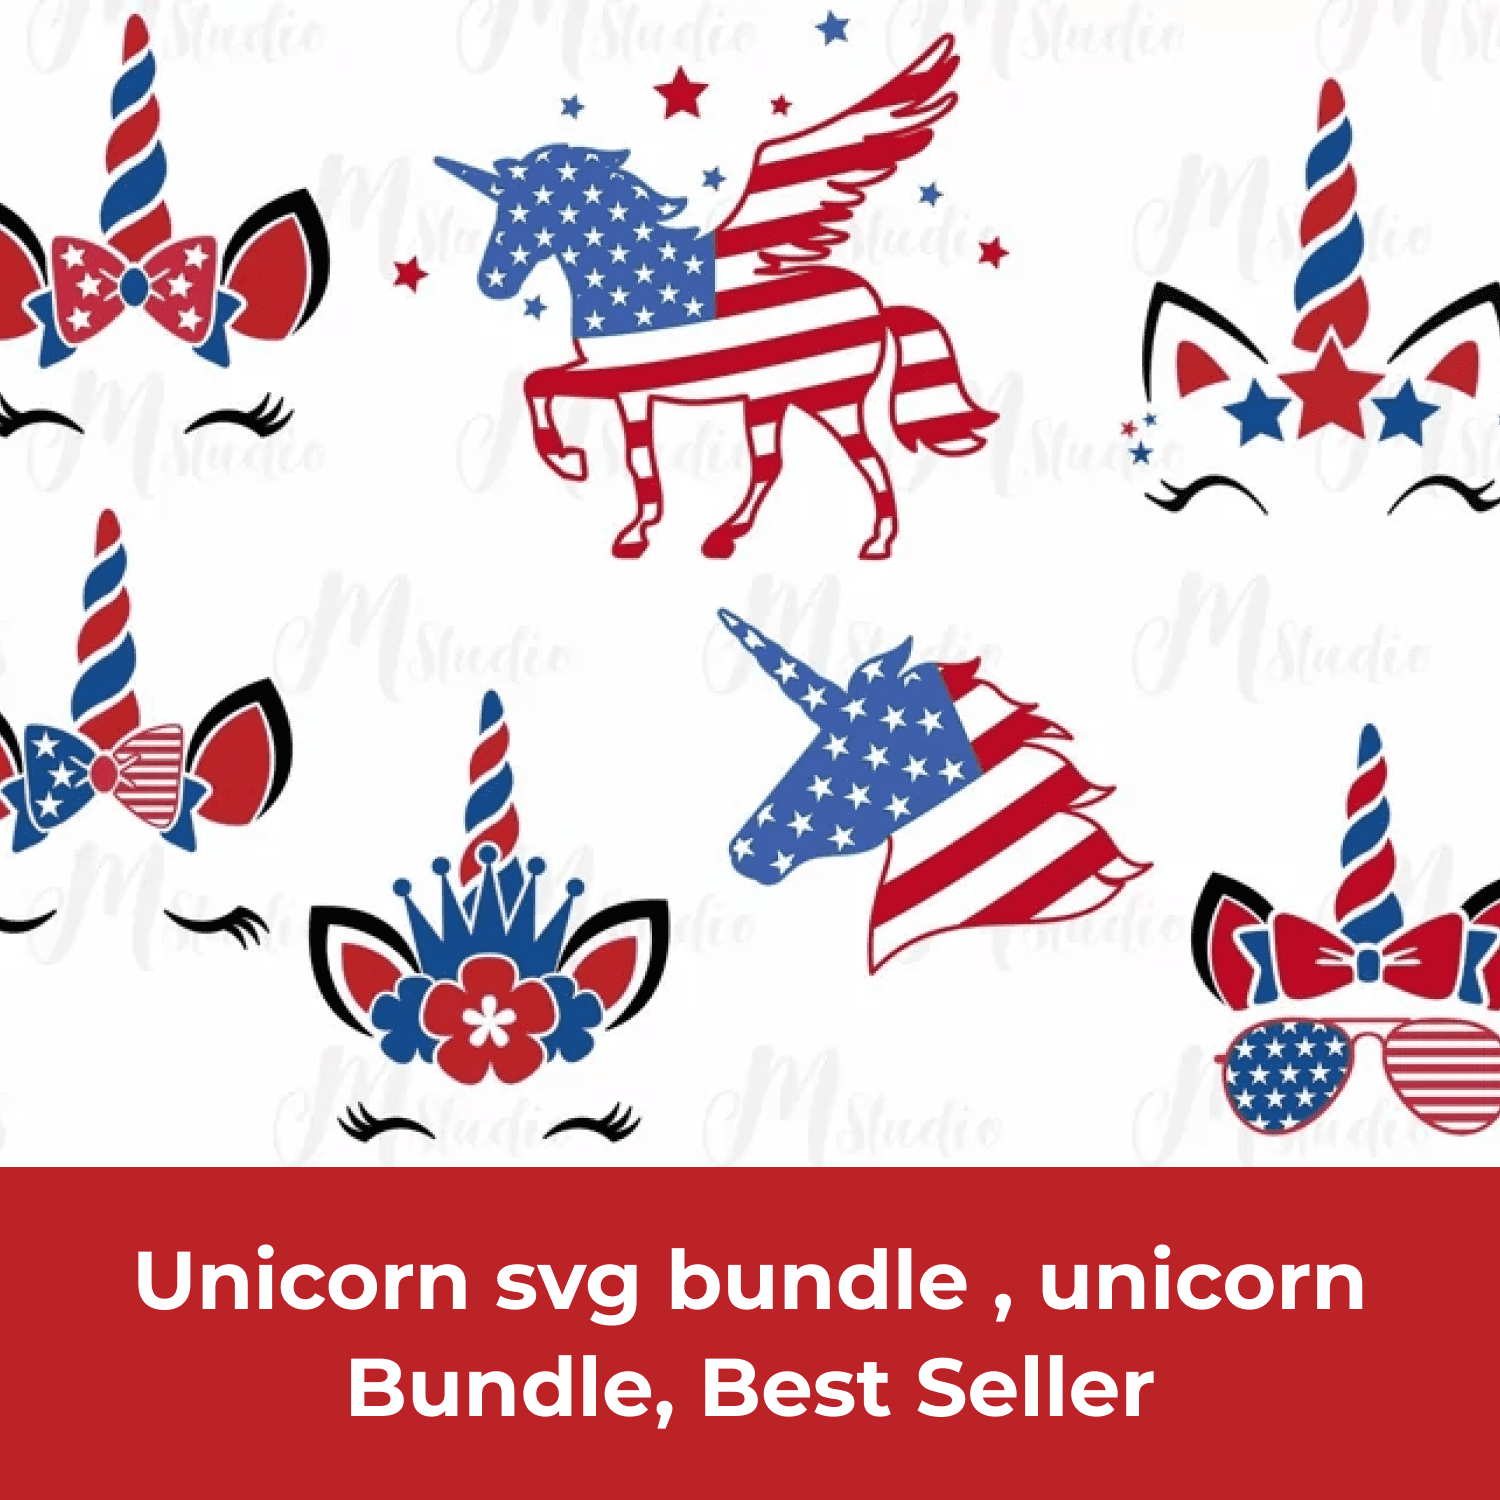 Unicorn svg bundle , unicorn Bundle, Best Seller cover.